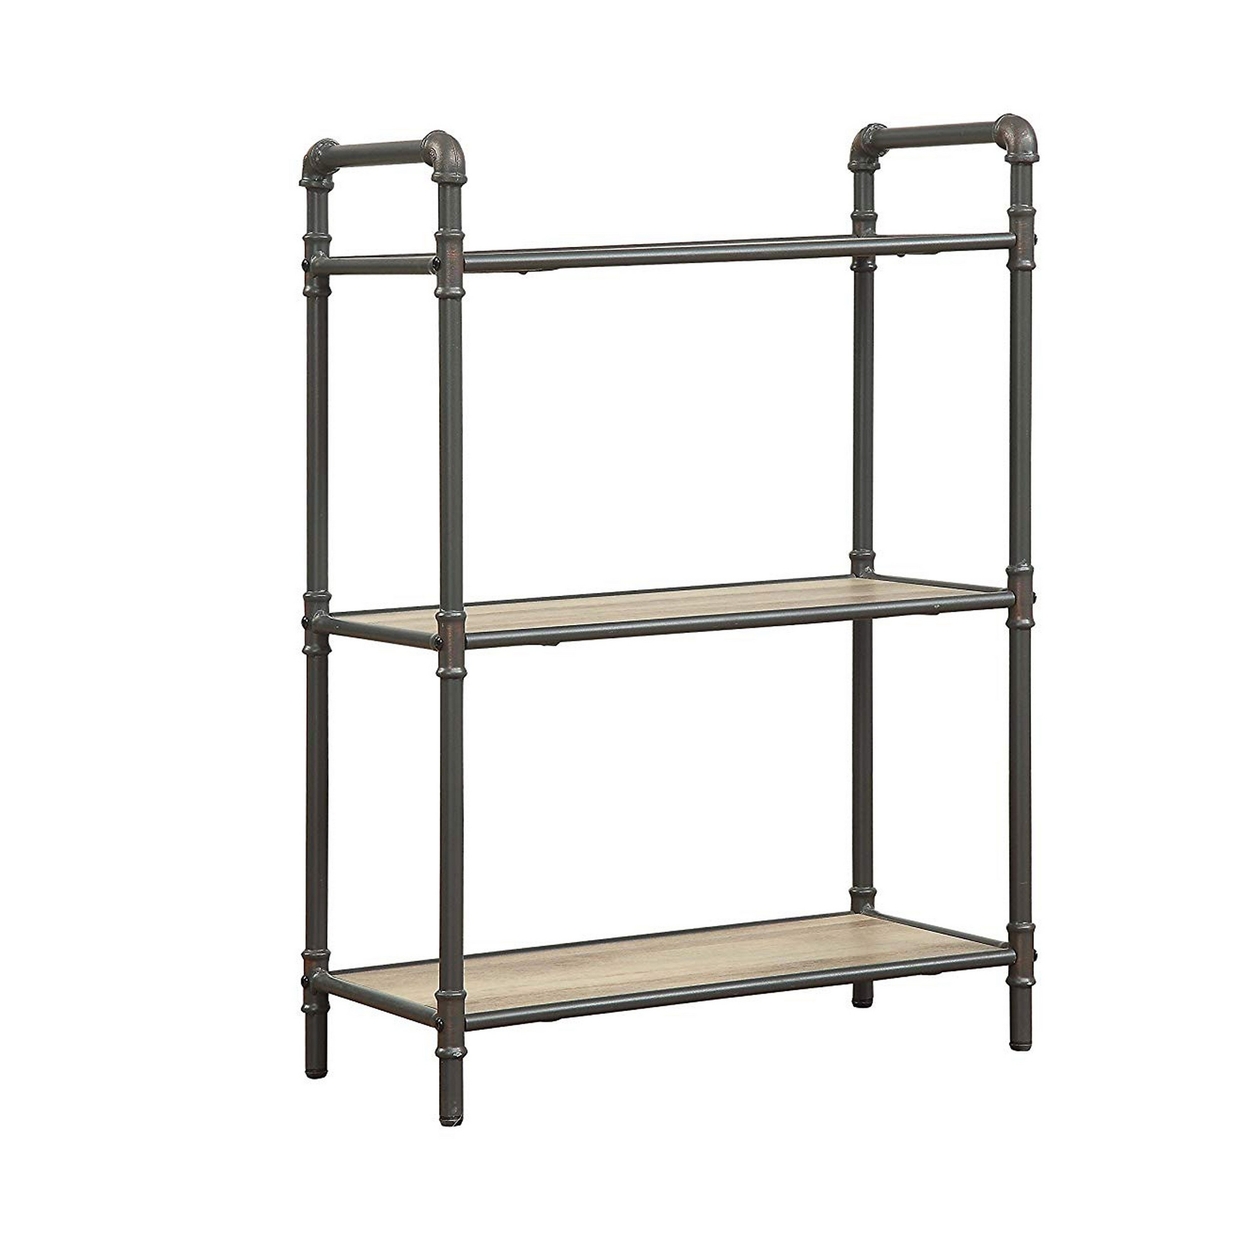 36 Inch Bookshelf, 3 Tier Design Wood Shelves, Open Gray Metal Frame